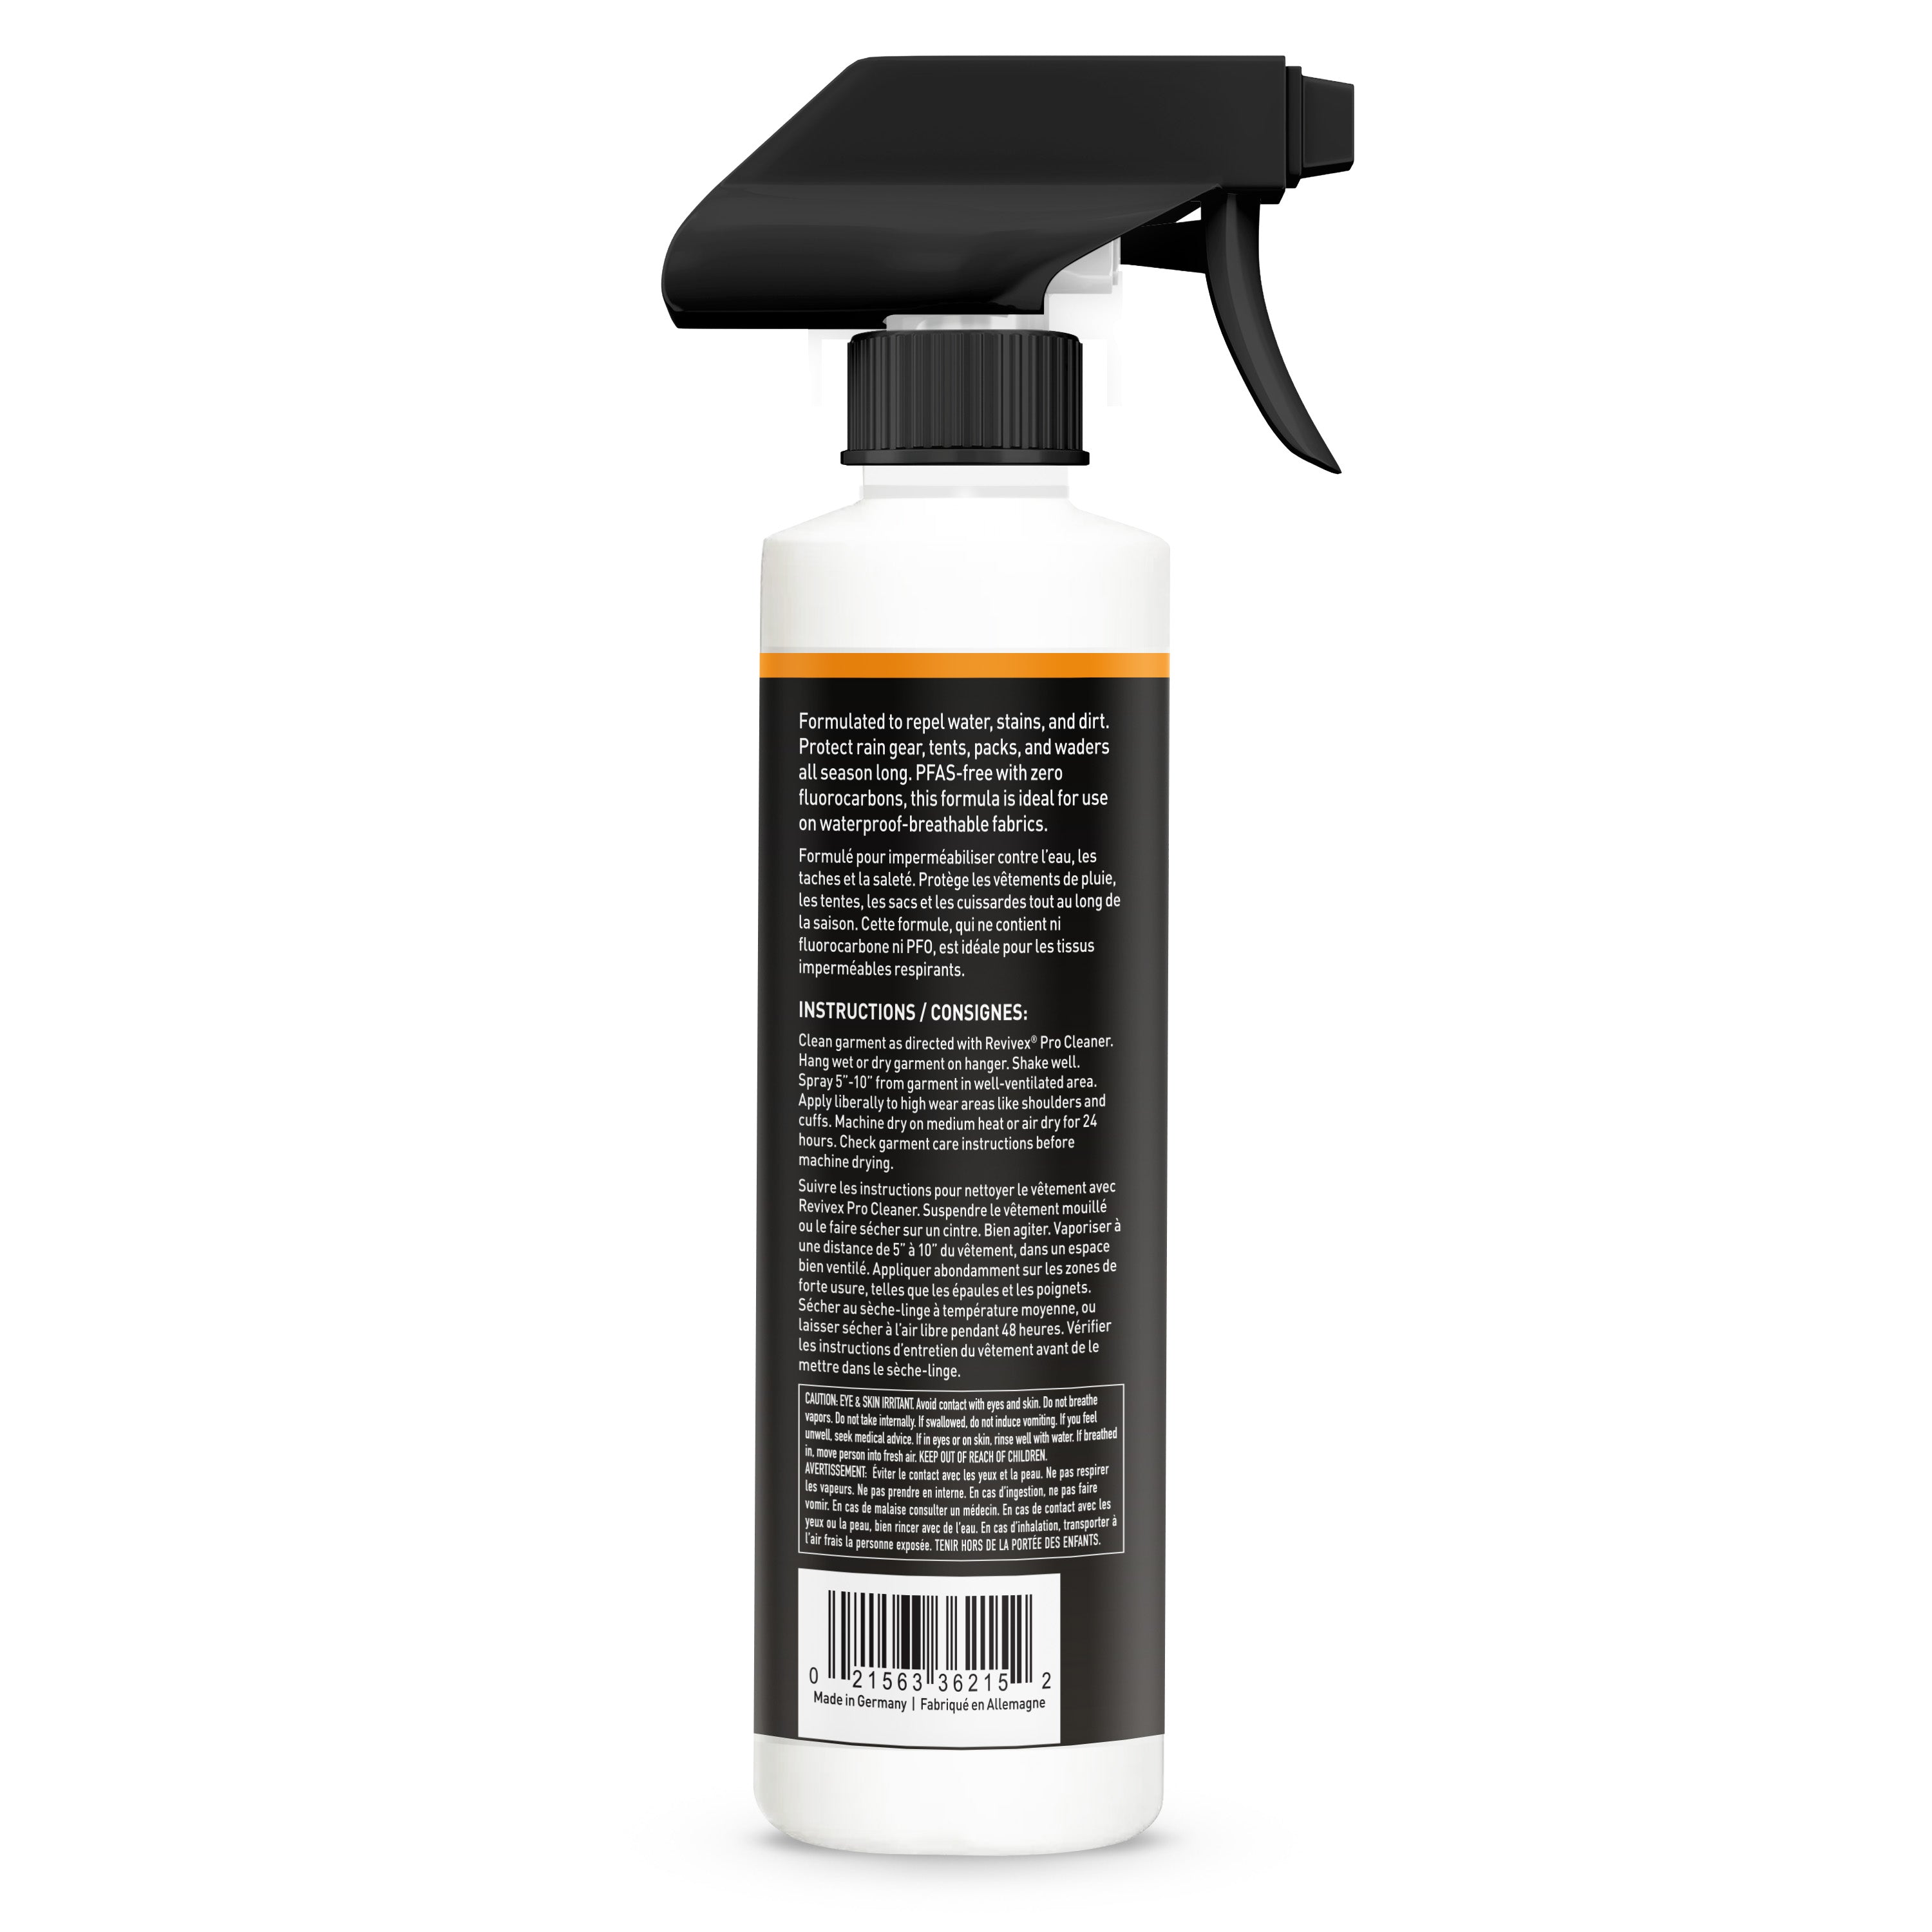 Klim ReviveX Durable Water Repellent Spray - 5053-002-000-000